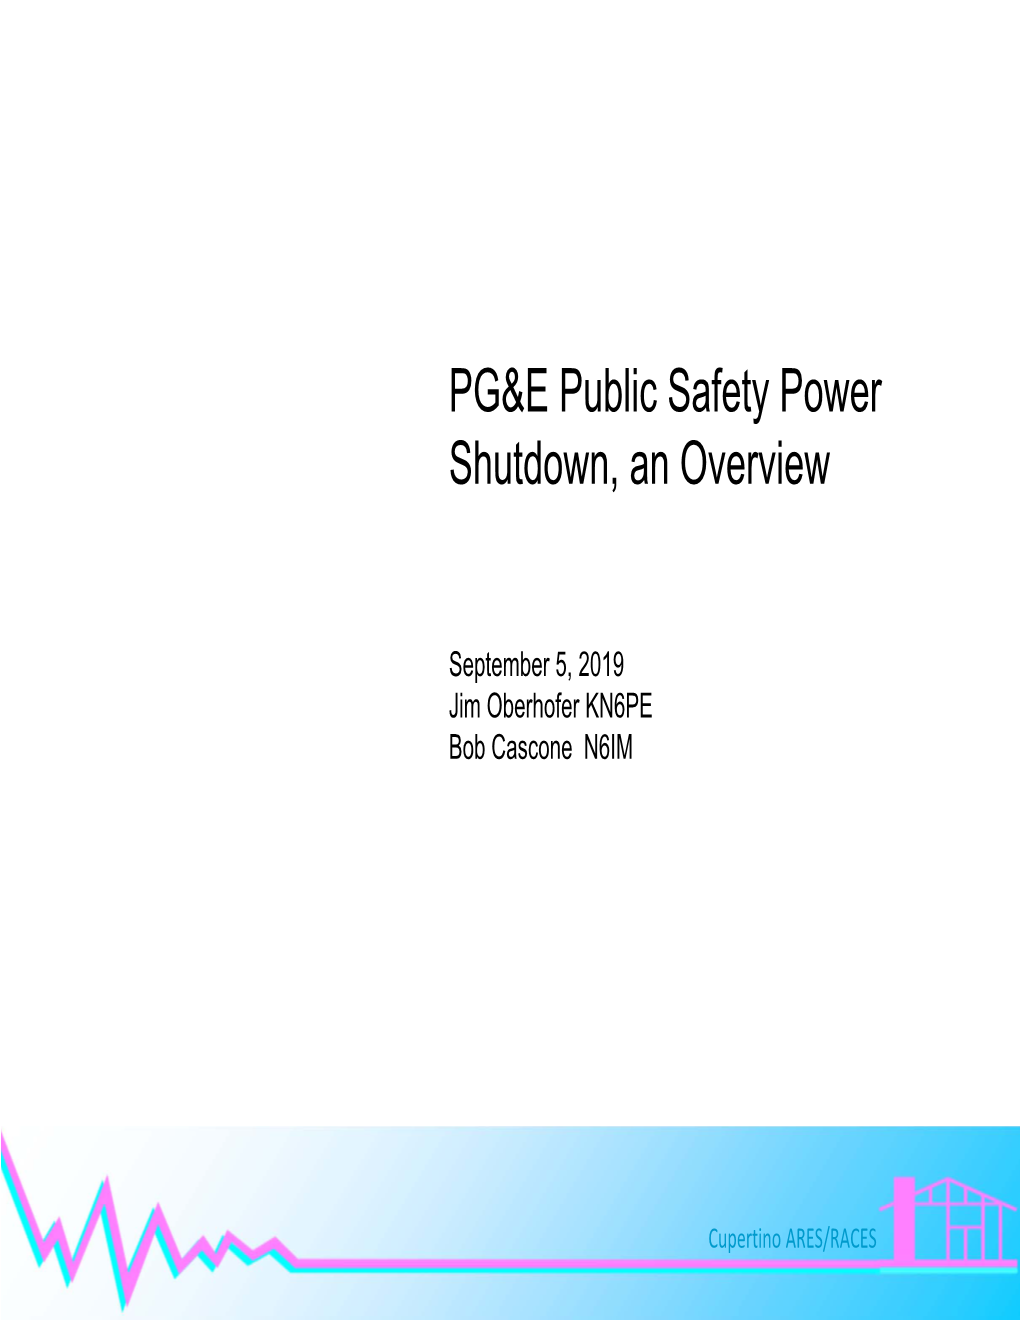 PG&E Public Safety Power Shutdown, an Overview